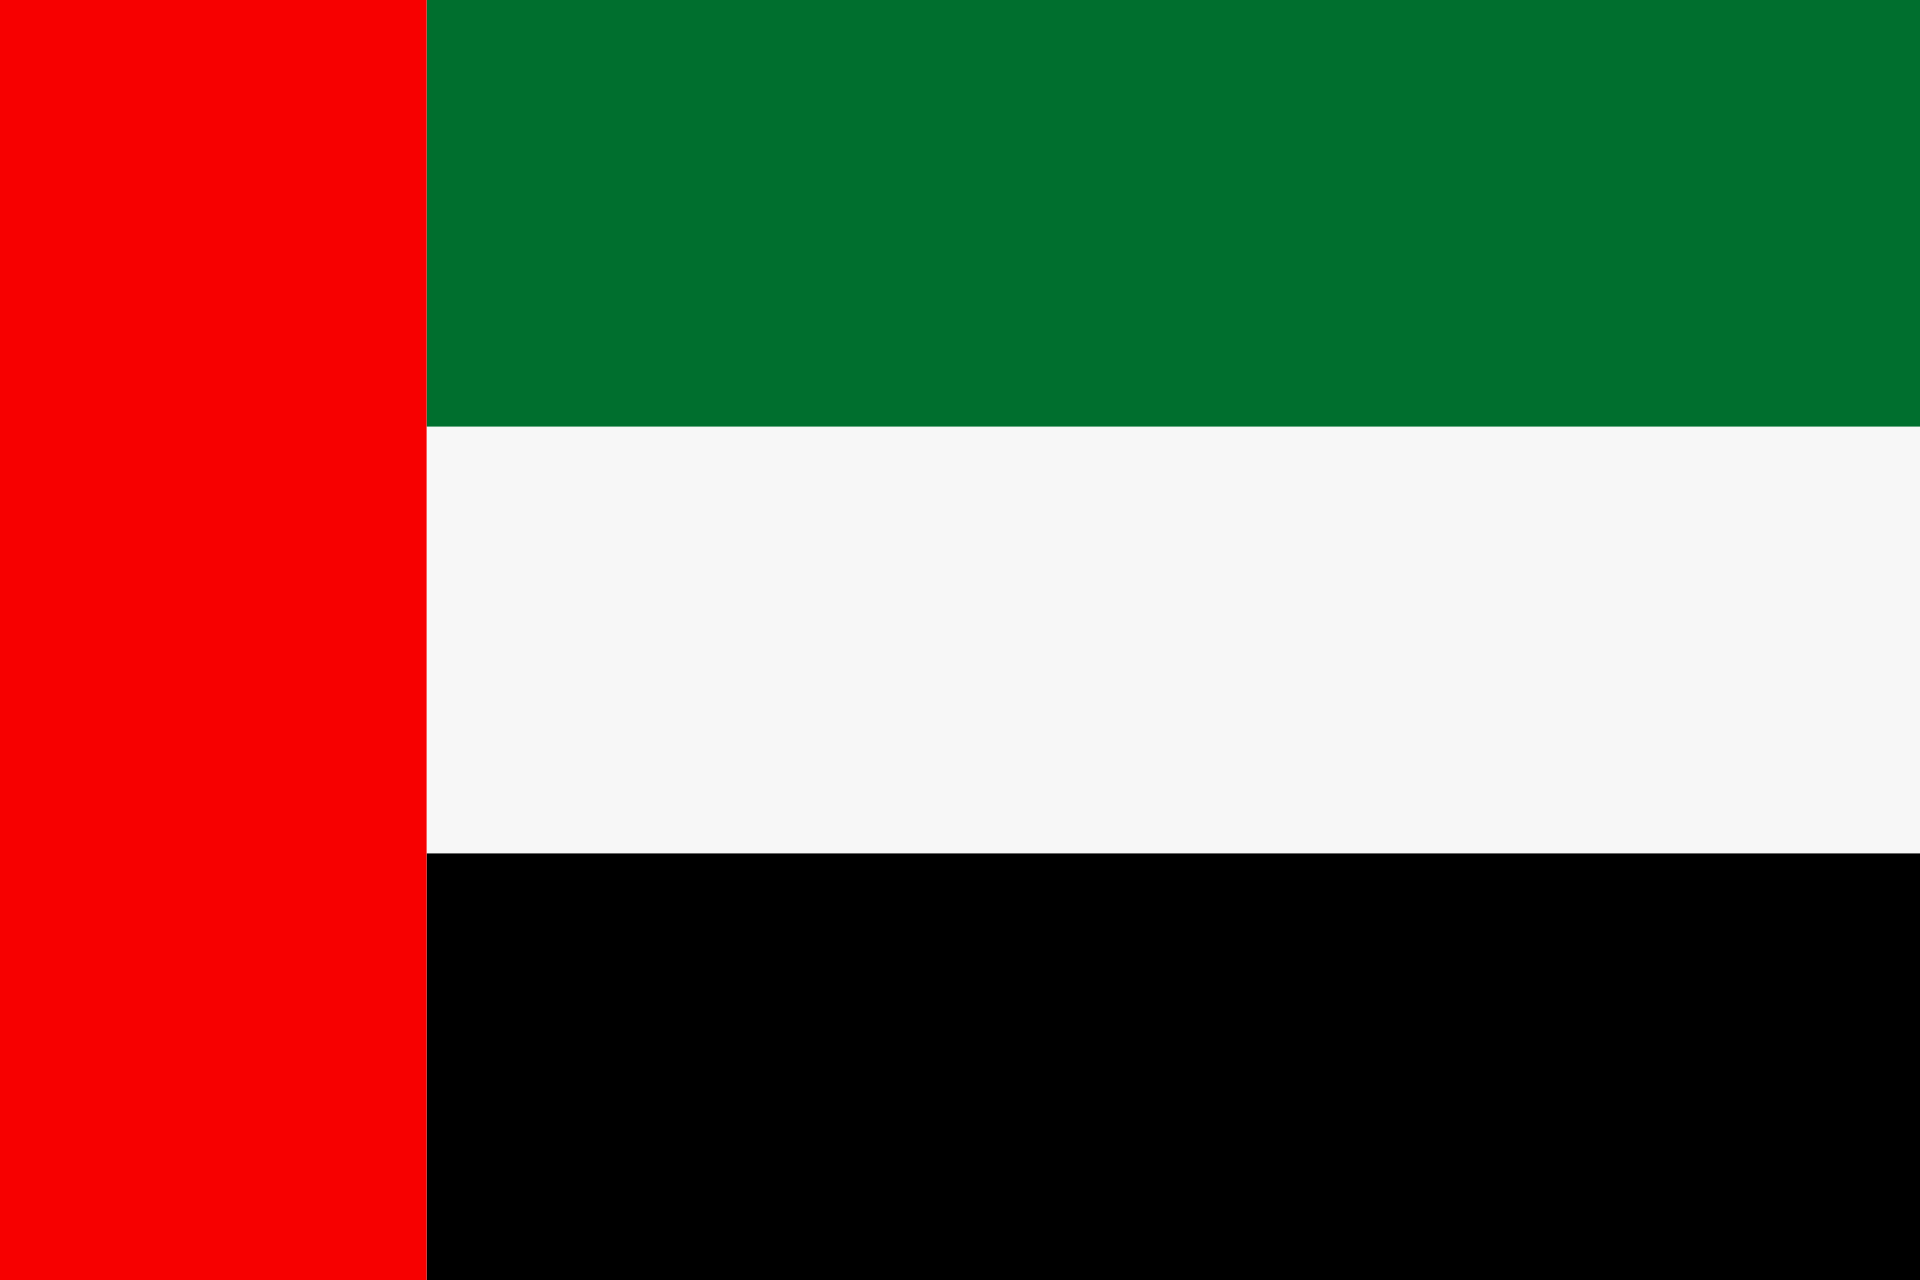 United Arab emirates flag - Amazon shop - Mars EC